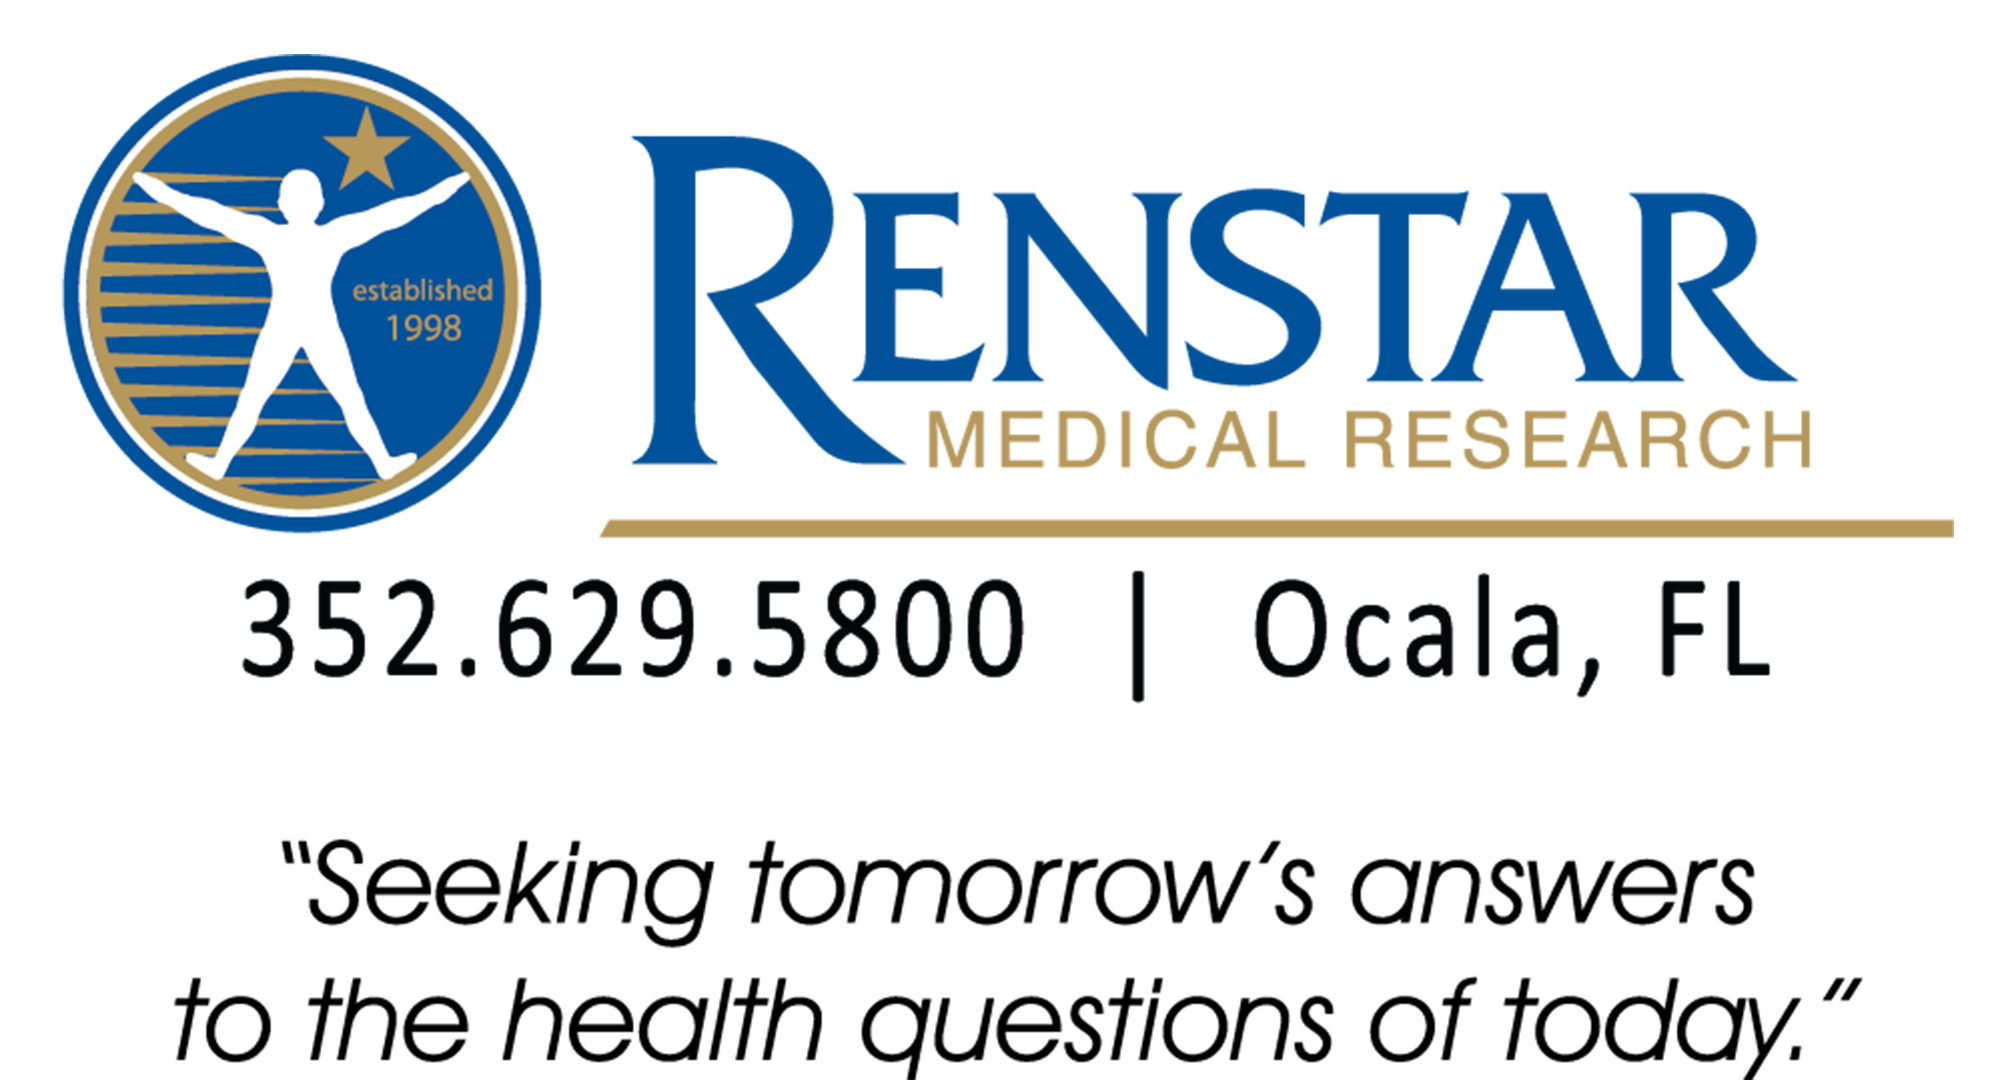 C1, Renstar Medical (Path of Hope)